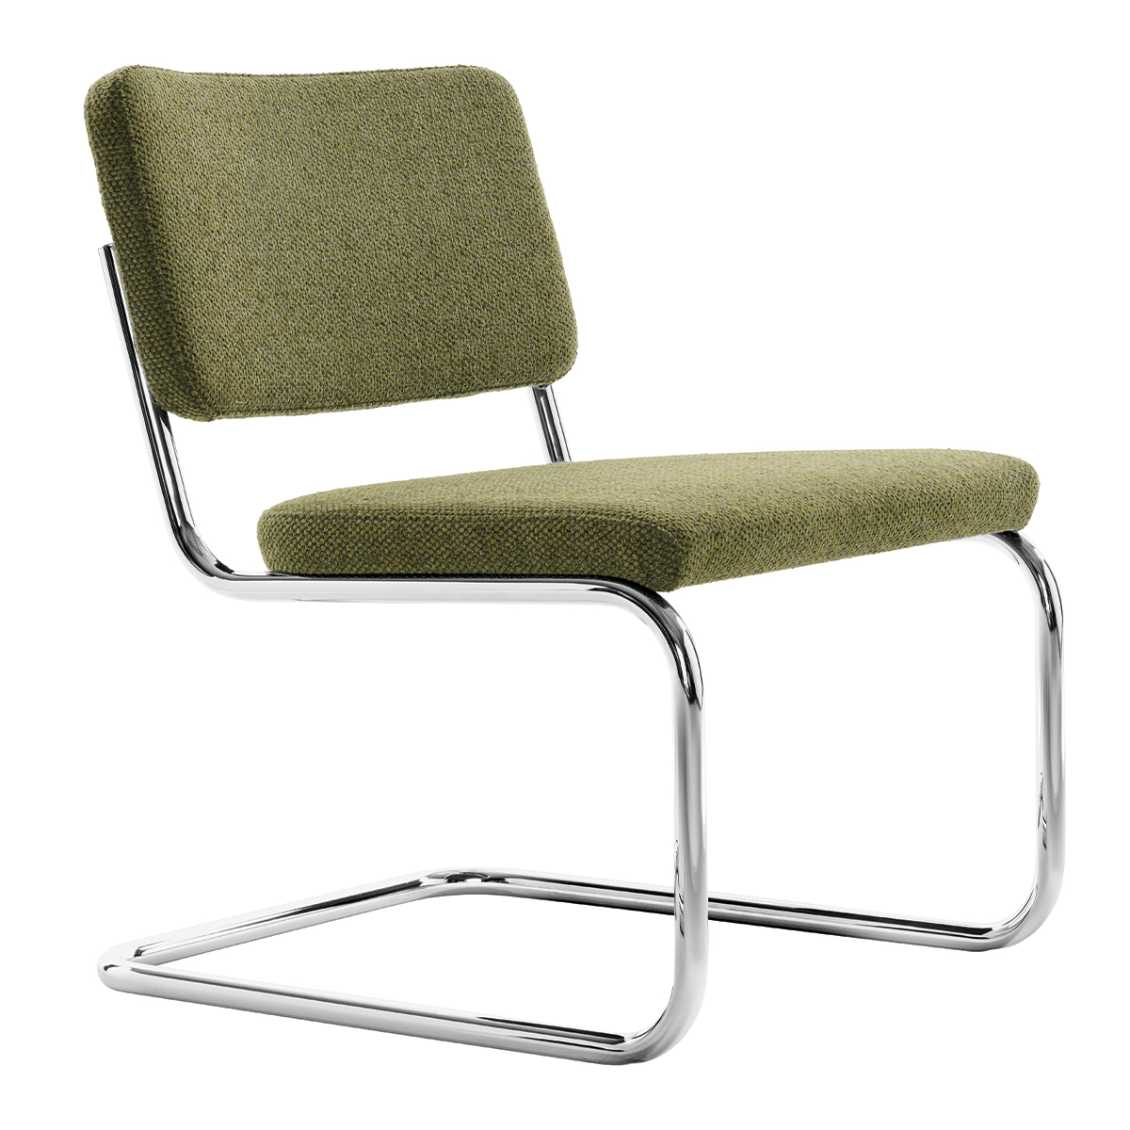 Thonet S 32 VL lounge chair